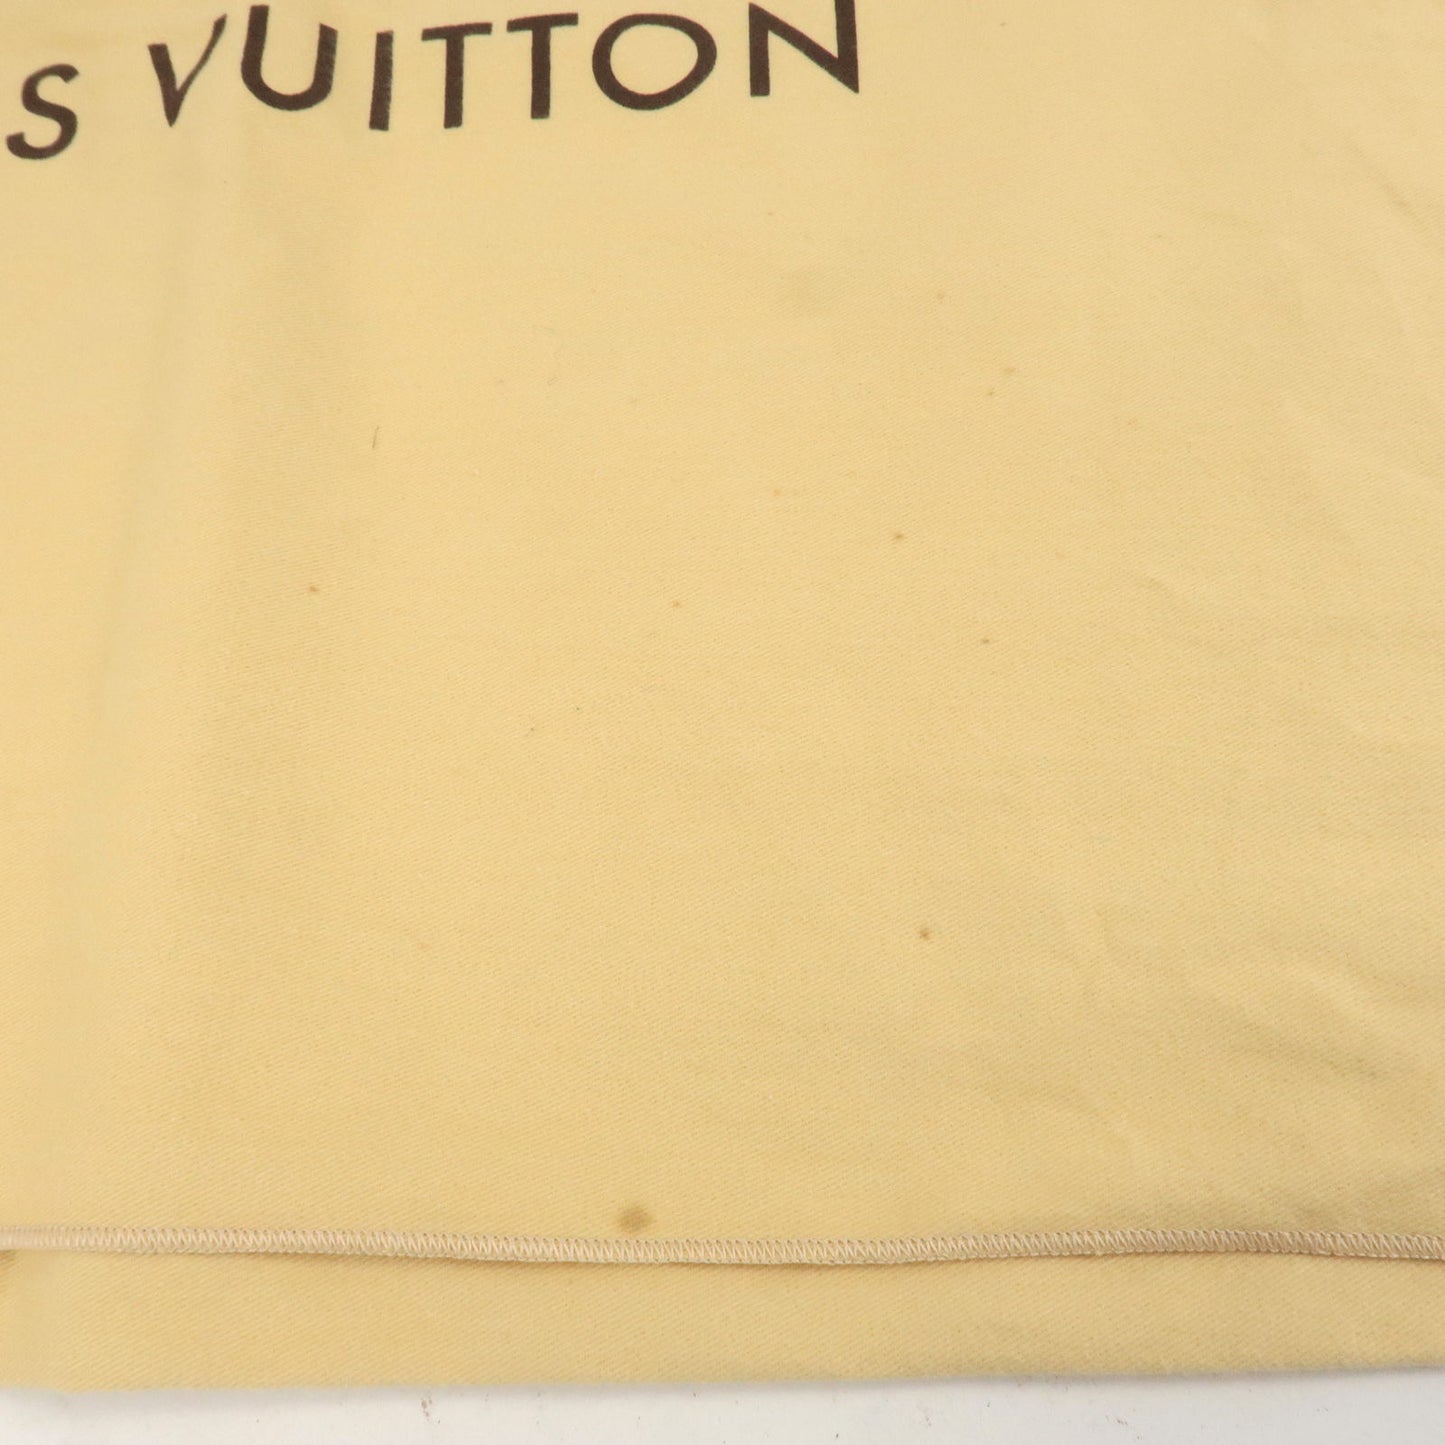 Louis-Vuitton-Set-of-10-Dust-Bag-Drawstring-Bag-Beige – dct